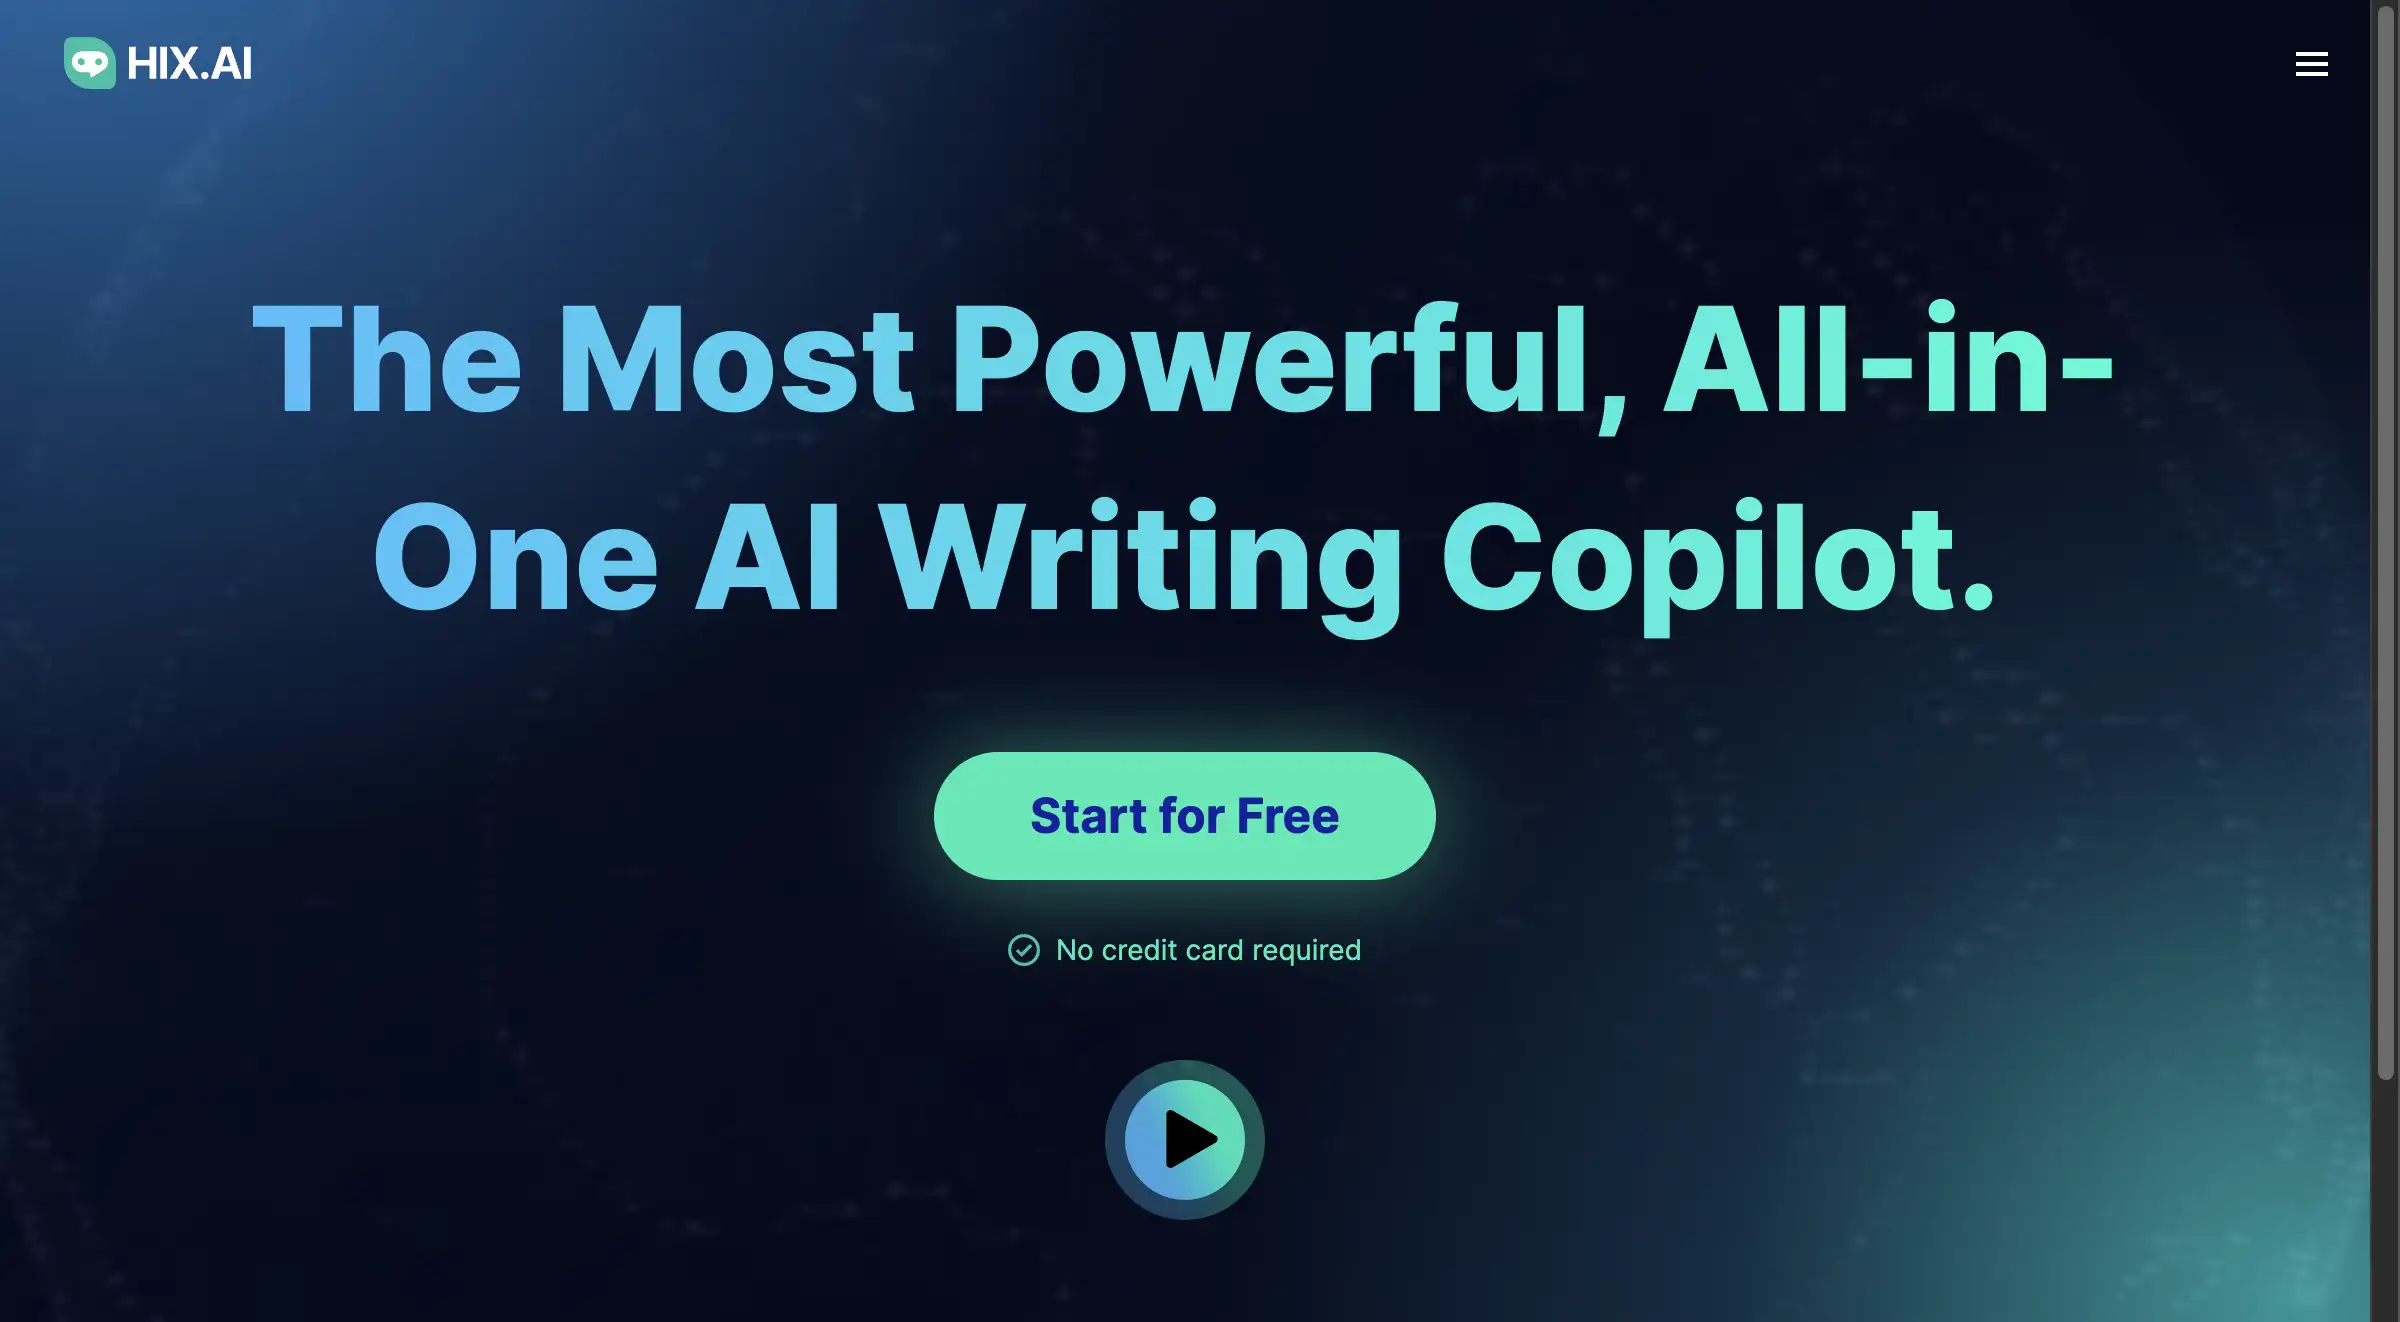 HIX.AI:All-In-One AI Writing Copilot